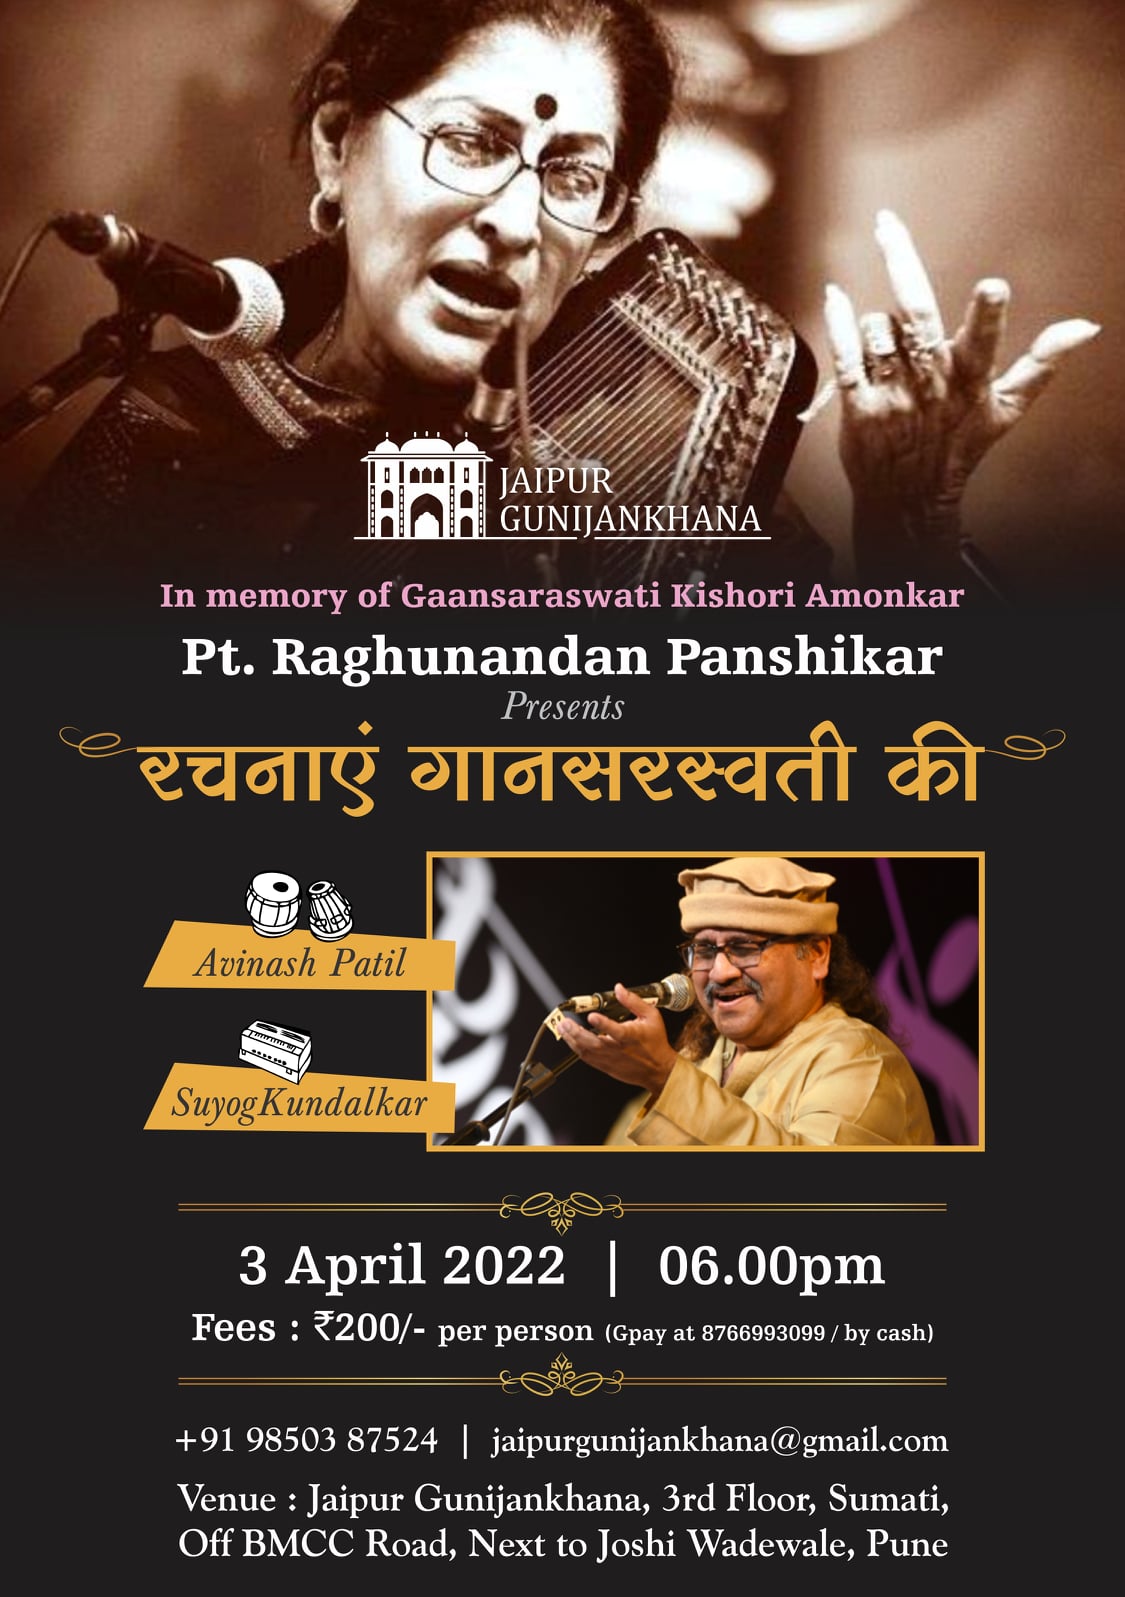 Pt. Raghunandan Panshikar talking about Ganasaraswati Kishori amonkar & Ganatapaswini Mogubai kurdikar